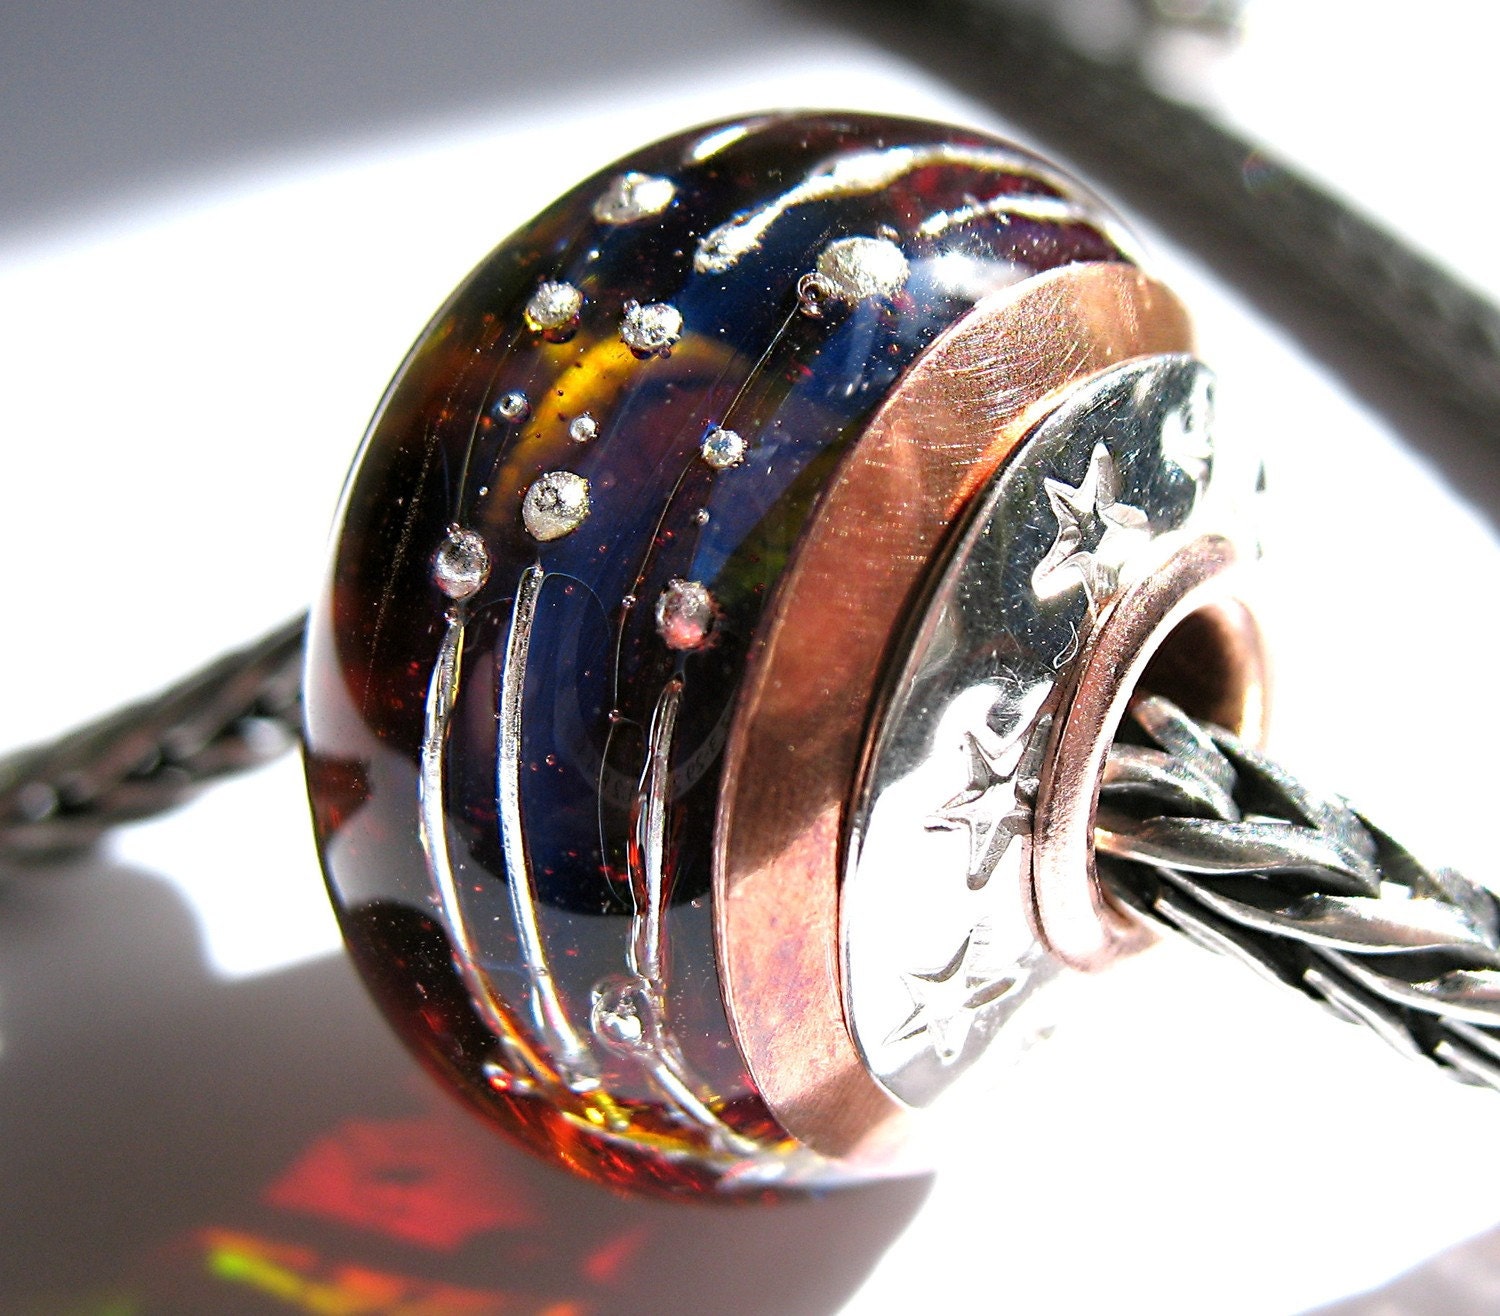 copper cored lampwork glass bead